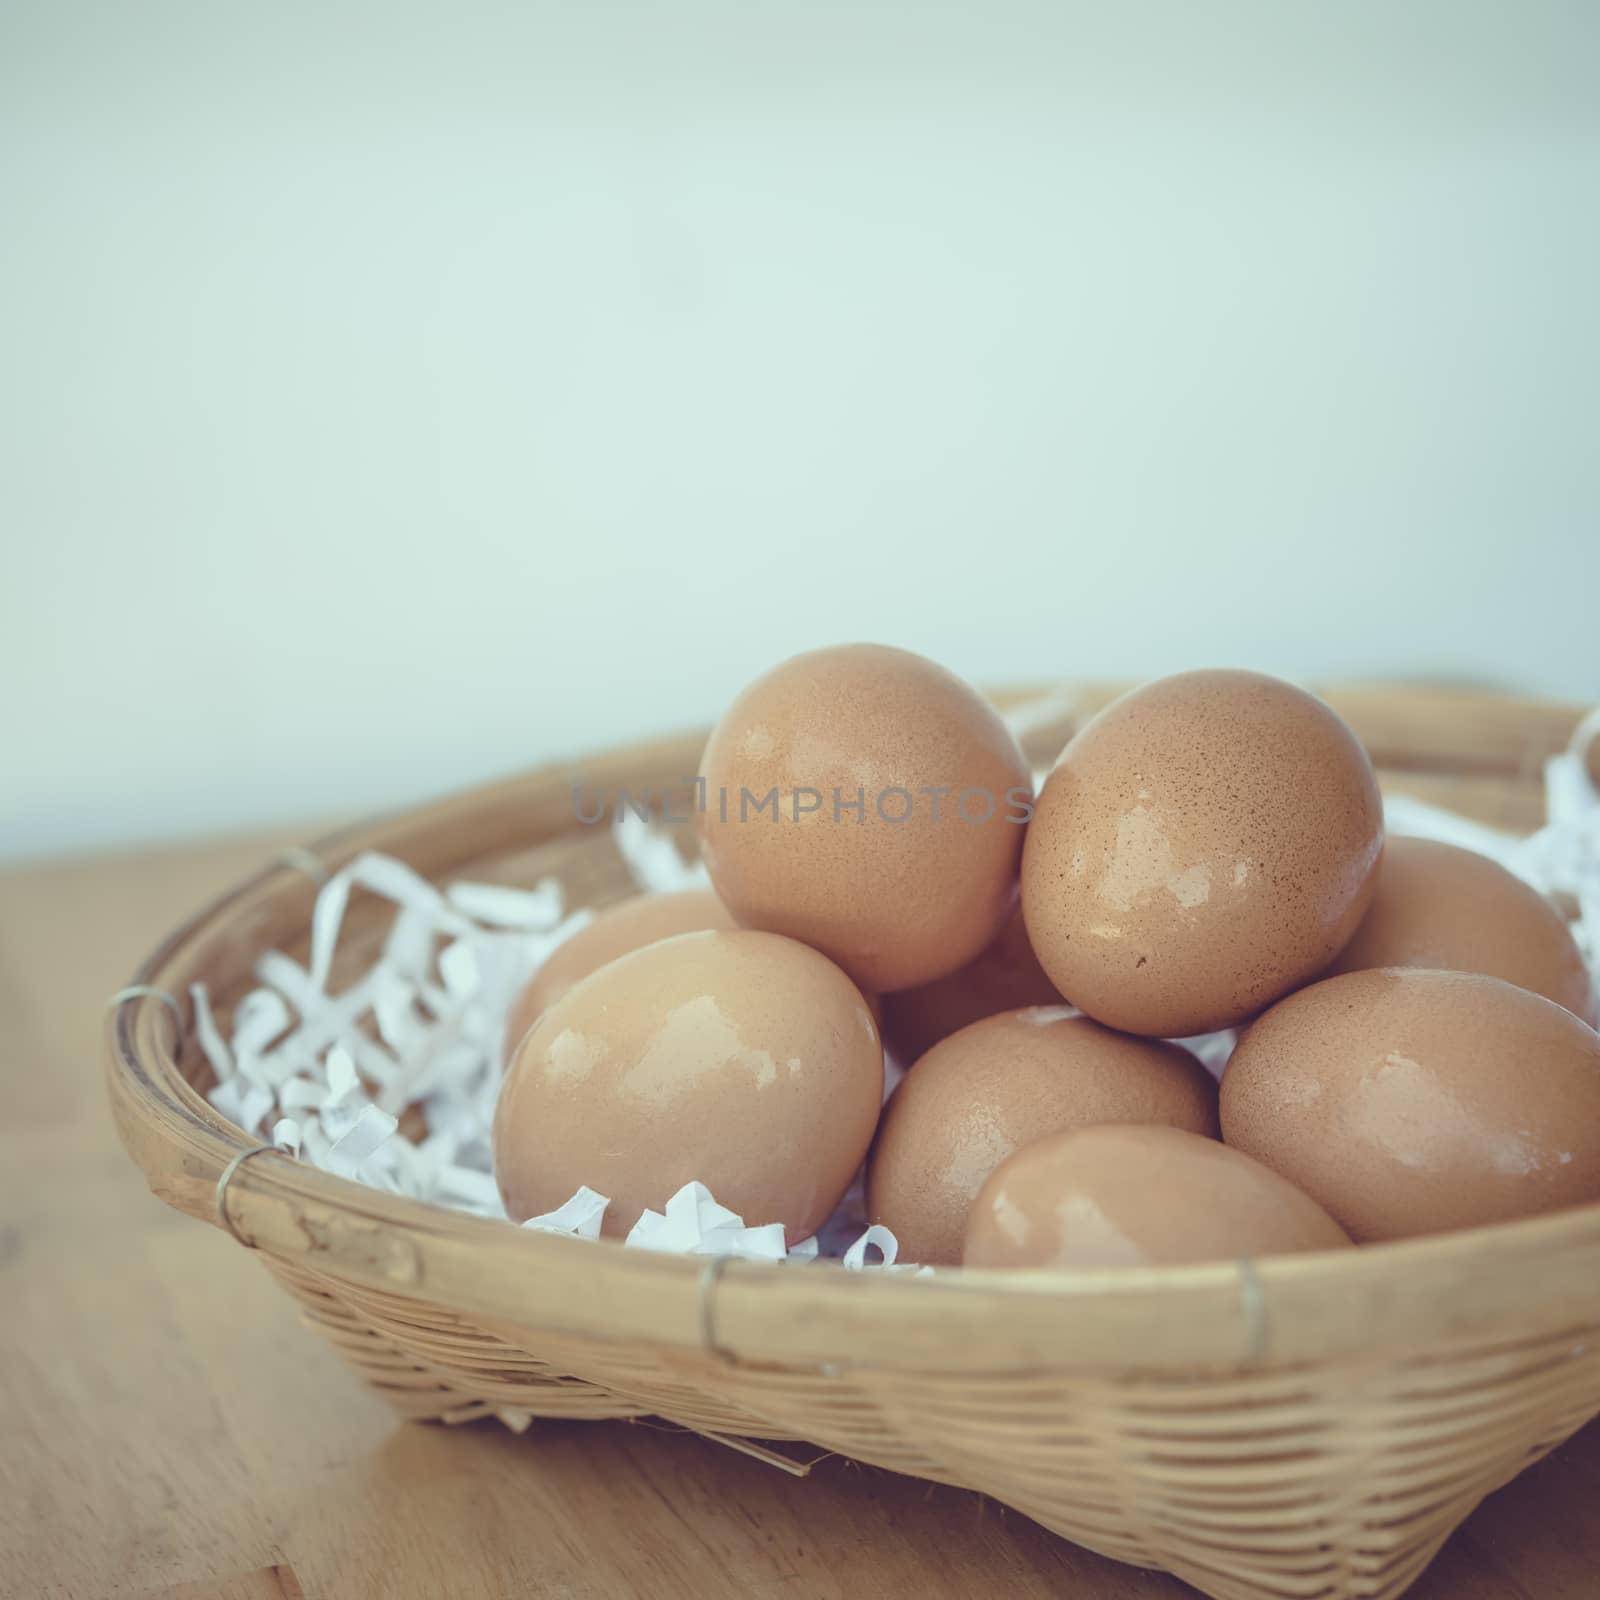 Eggs in a wicker basket on a wooden table